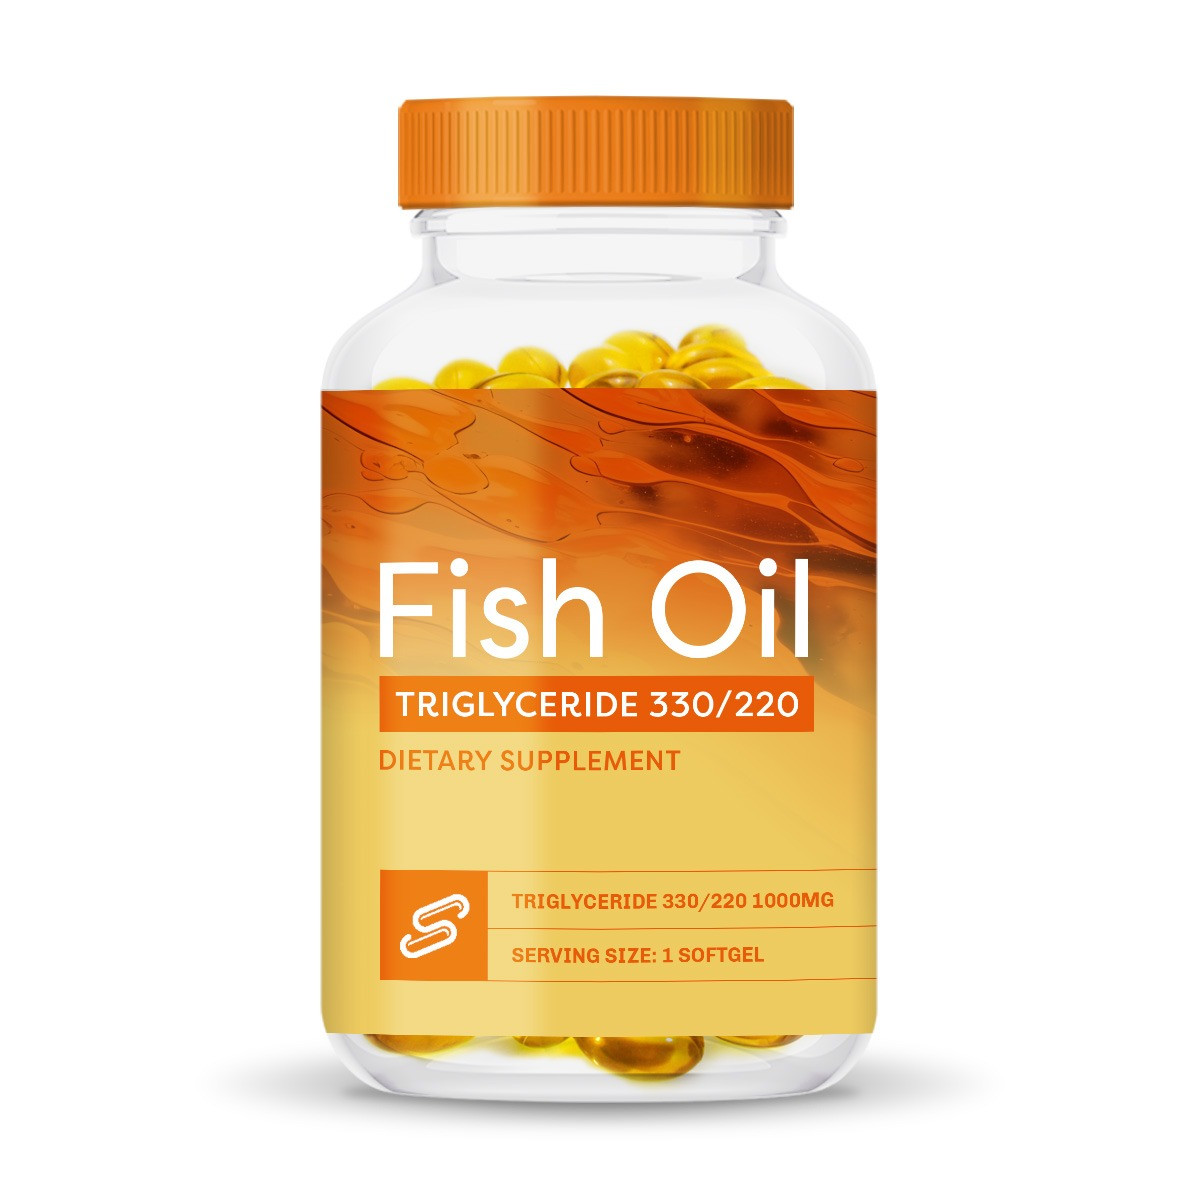 Fish Oil Triglyceride 330/220